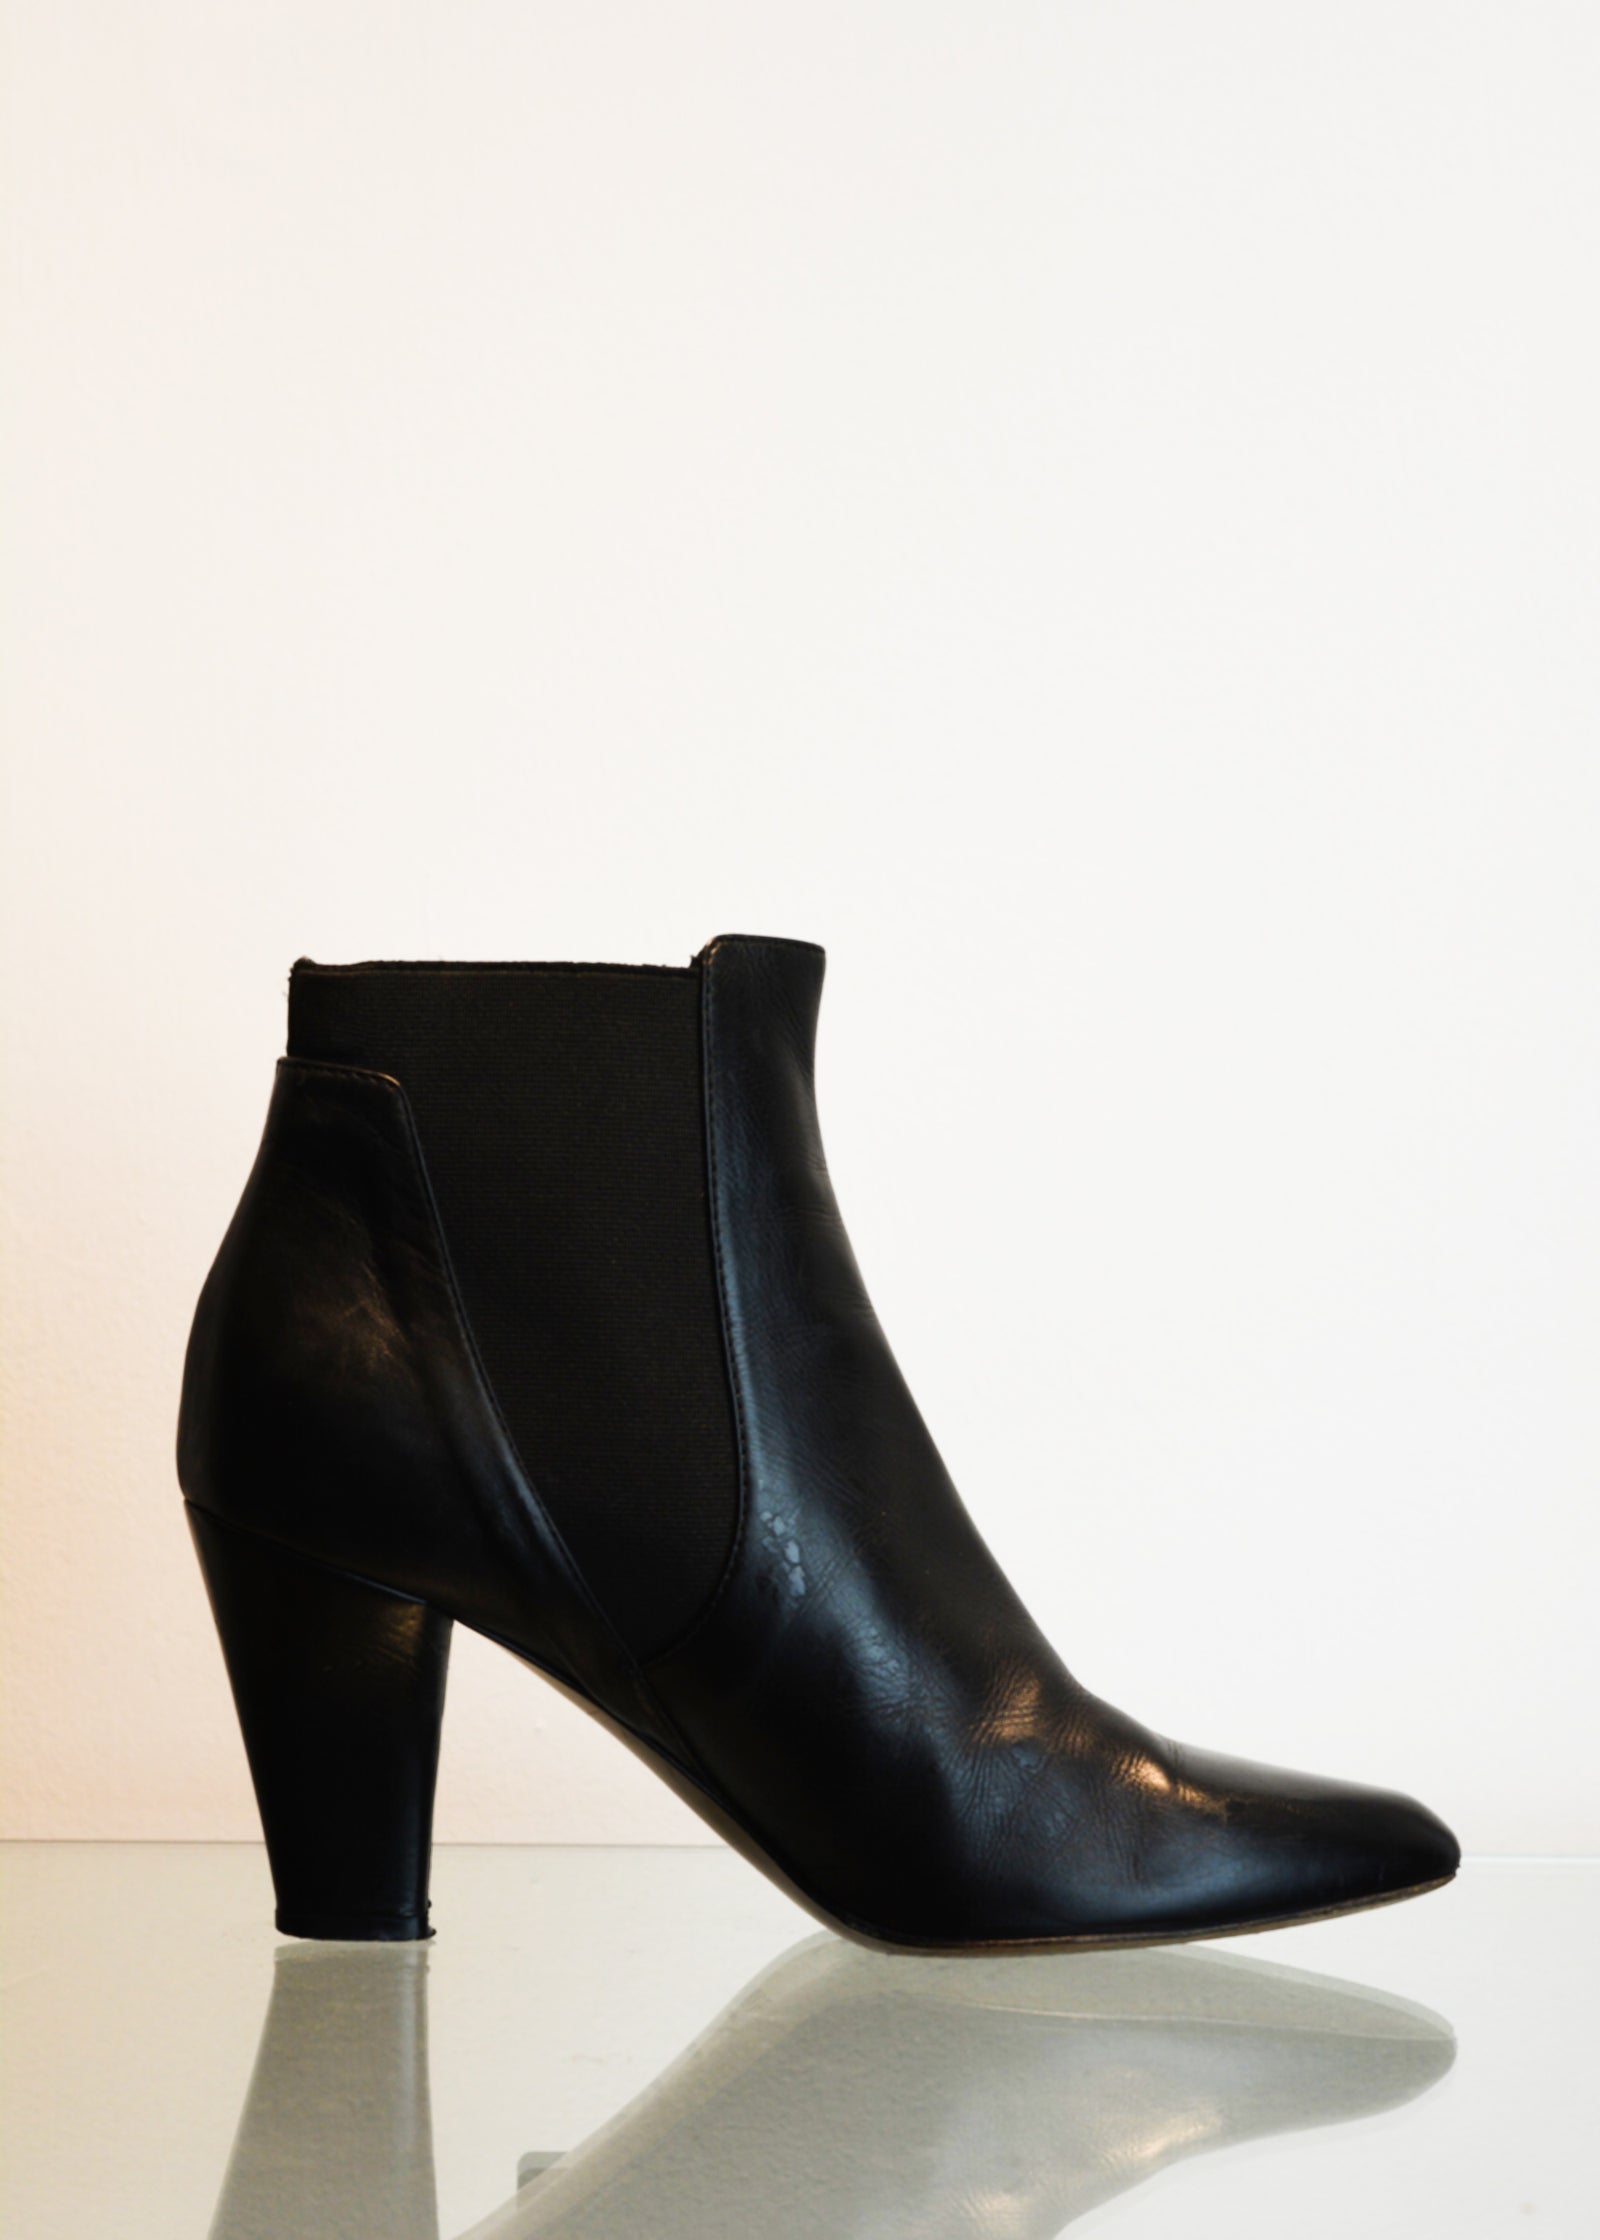 PREWORN | Preloved - 'HOBBS' Ankle Boot - Size 6 UK